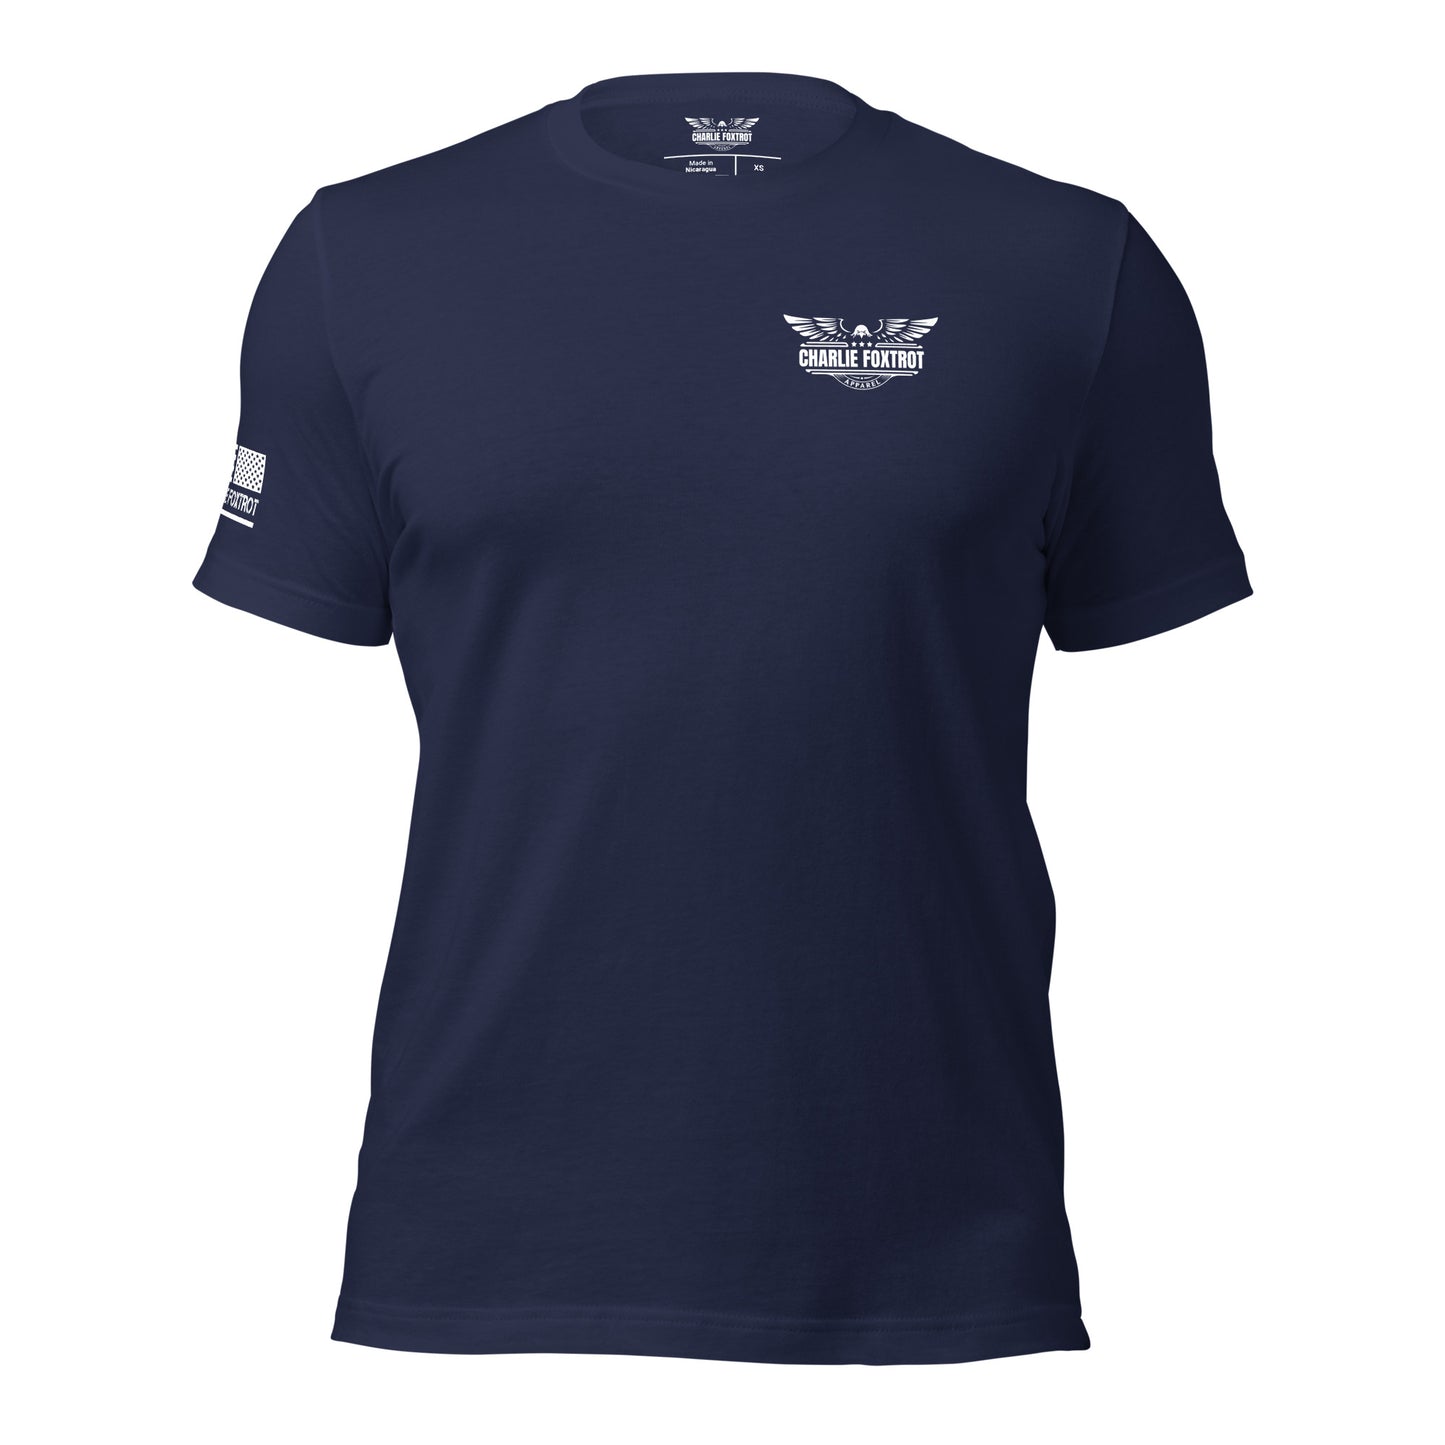 Israel Defense Force Unisex T-shirt